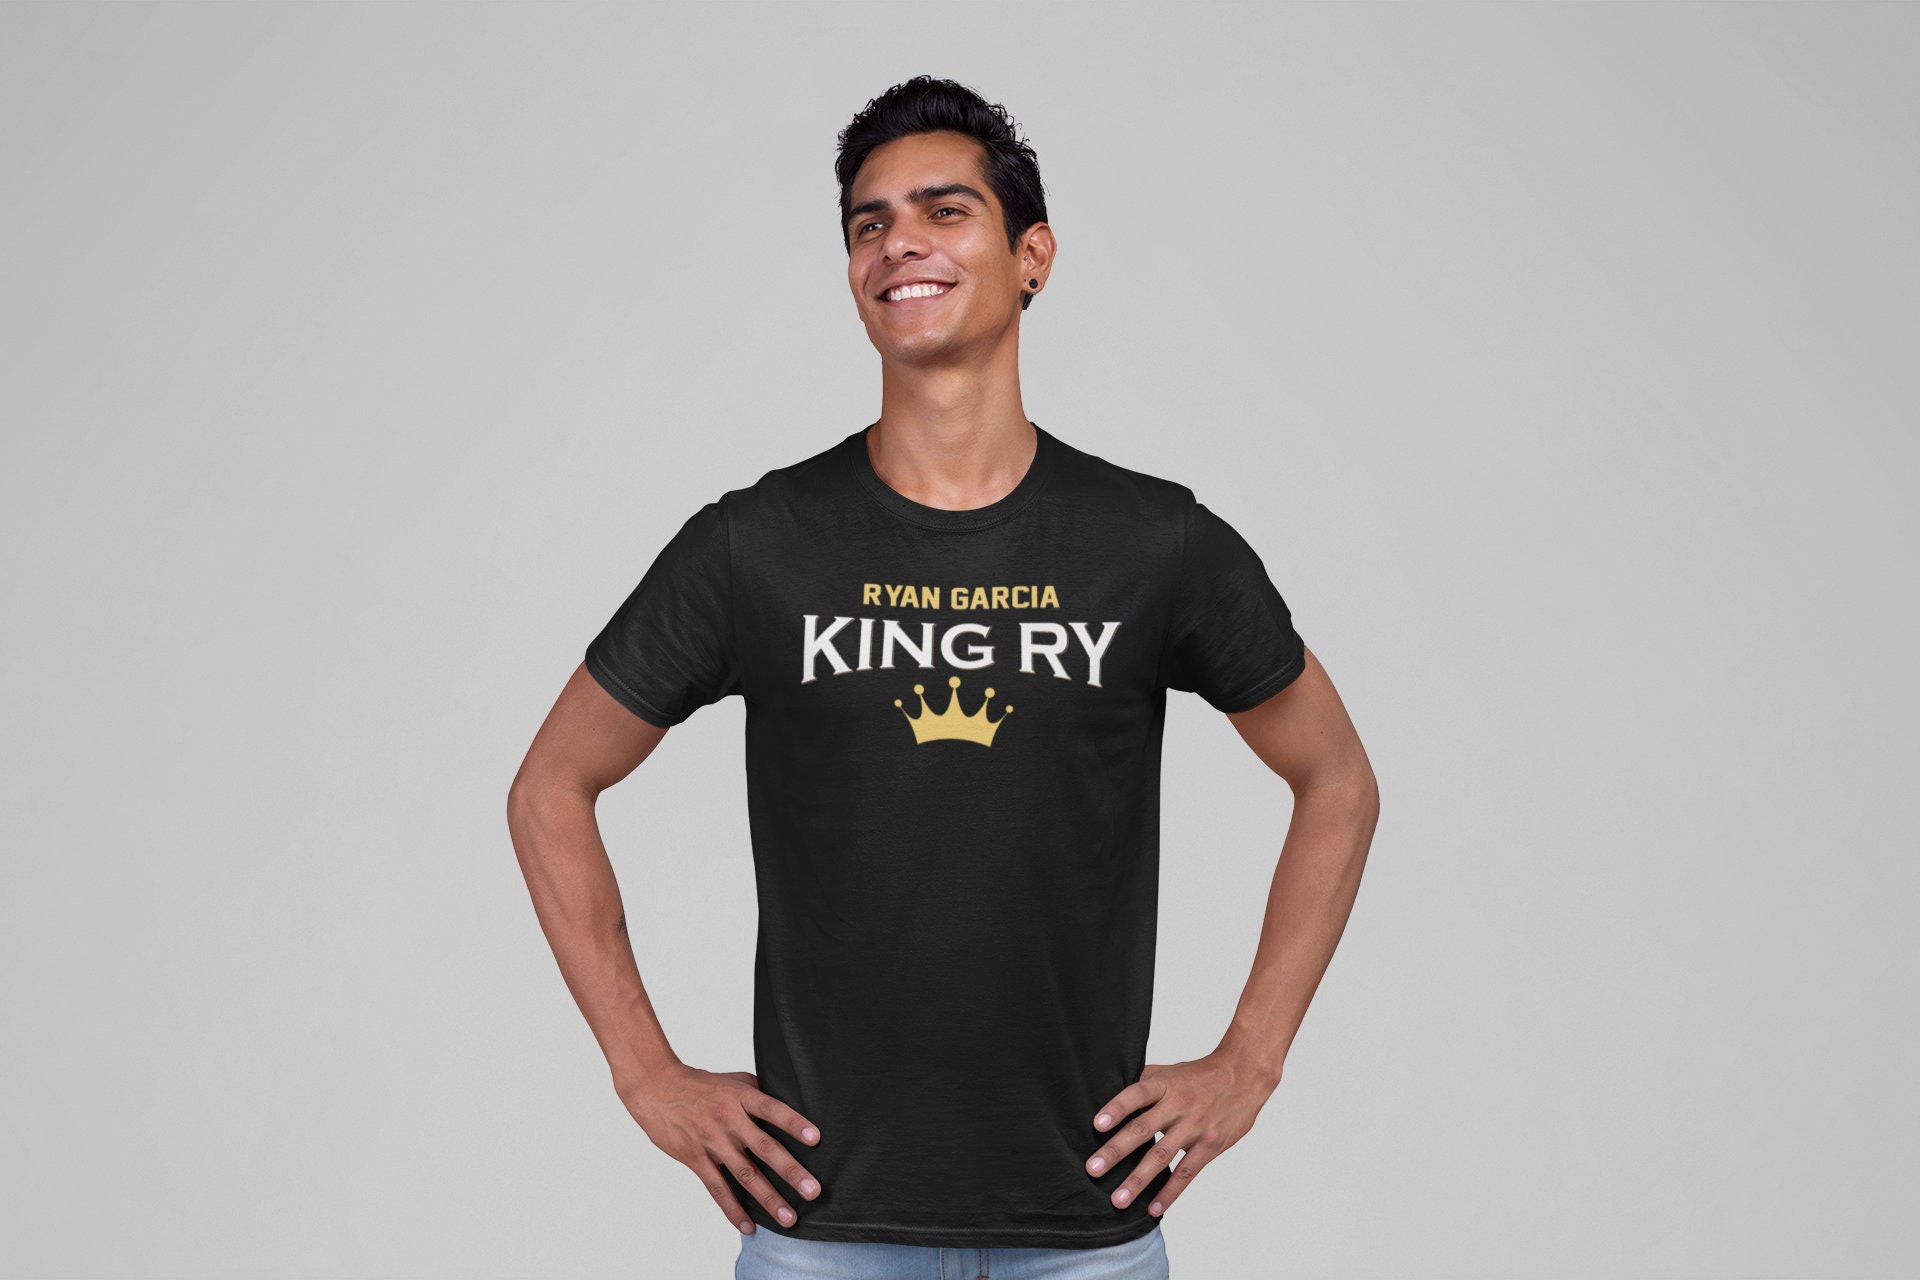 King Ryan Garcia Boxing Fighter Wear Unisex T-shirt - Etsy